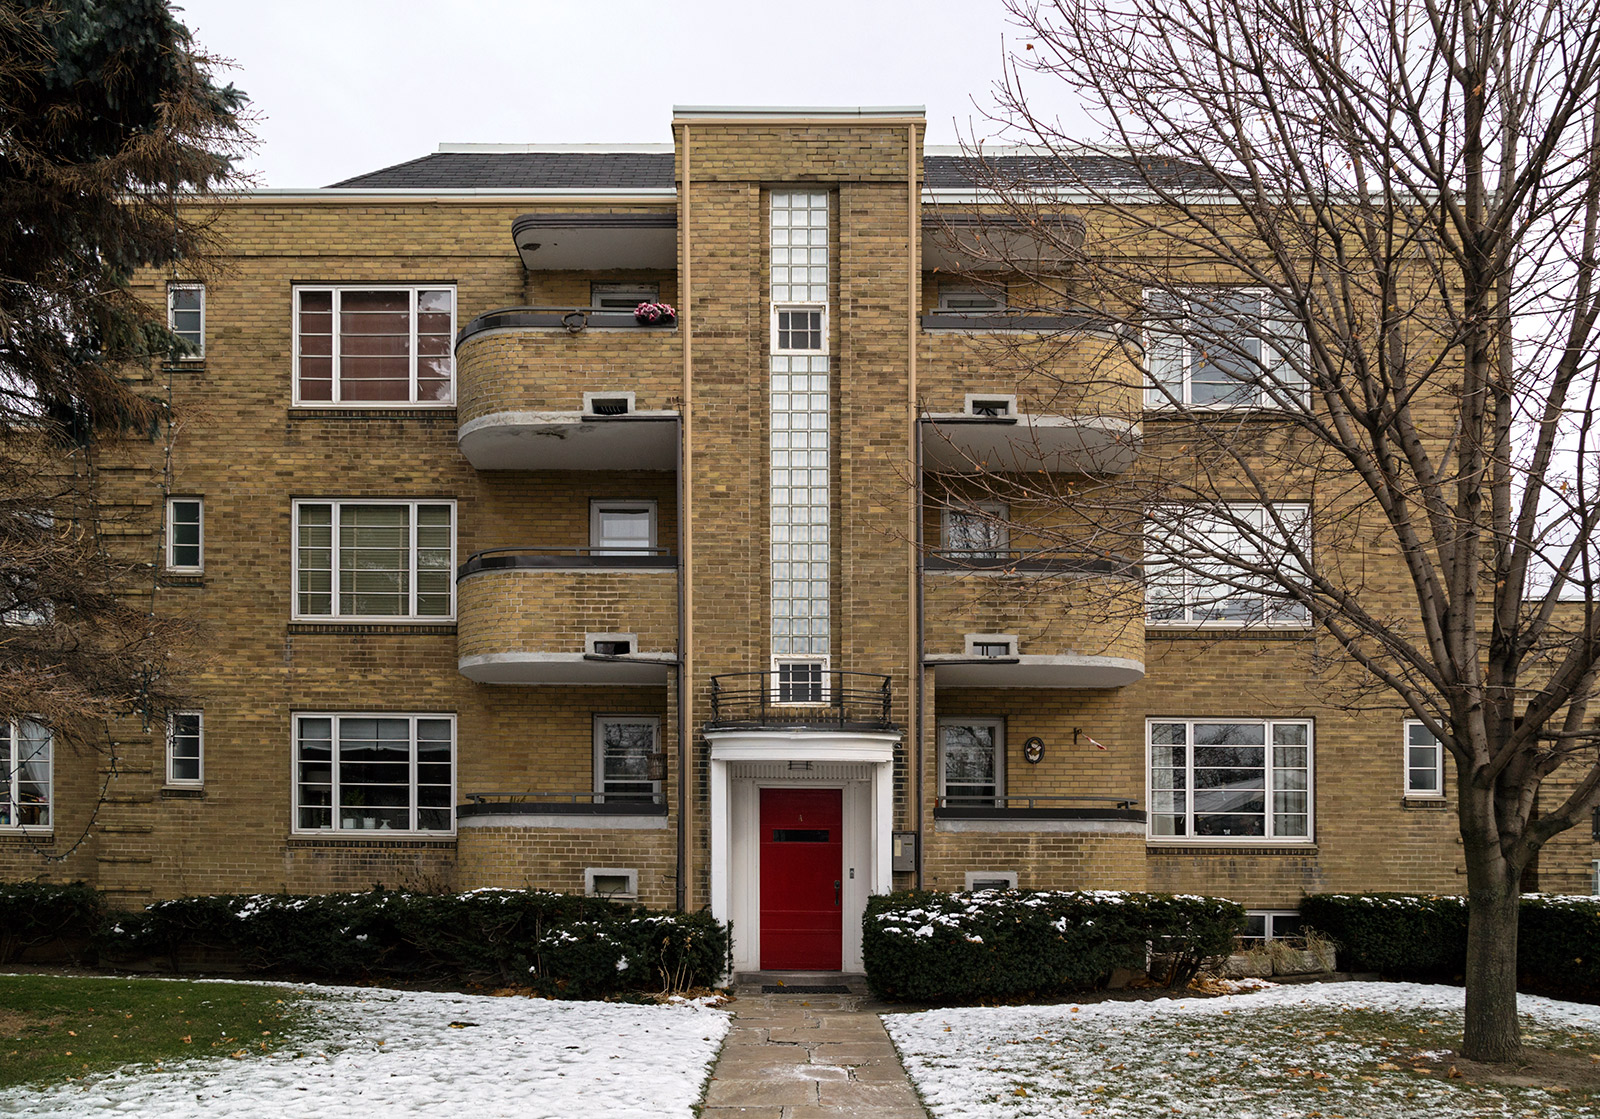 20141120. Toronto's beautiful Art Deco apartments at 1477 Bayvie